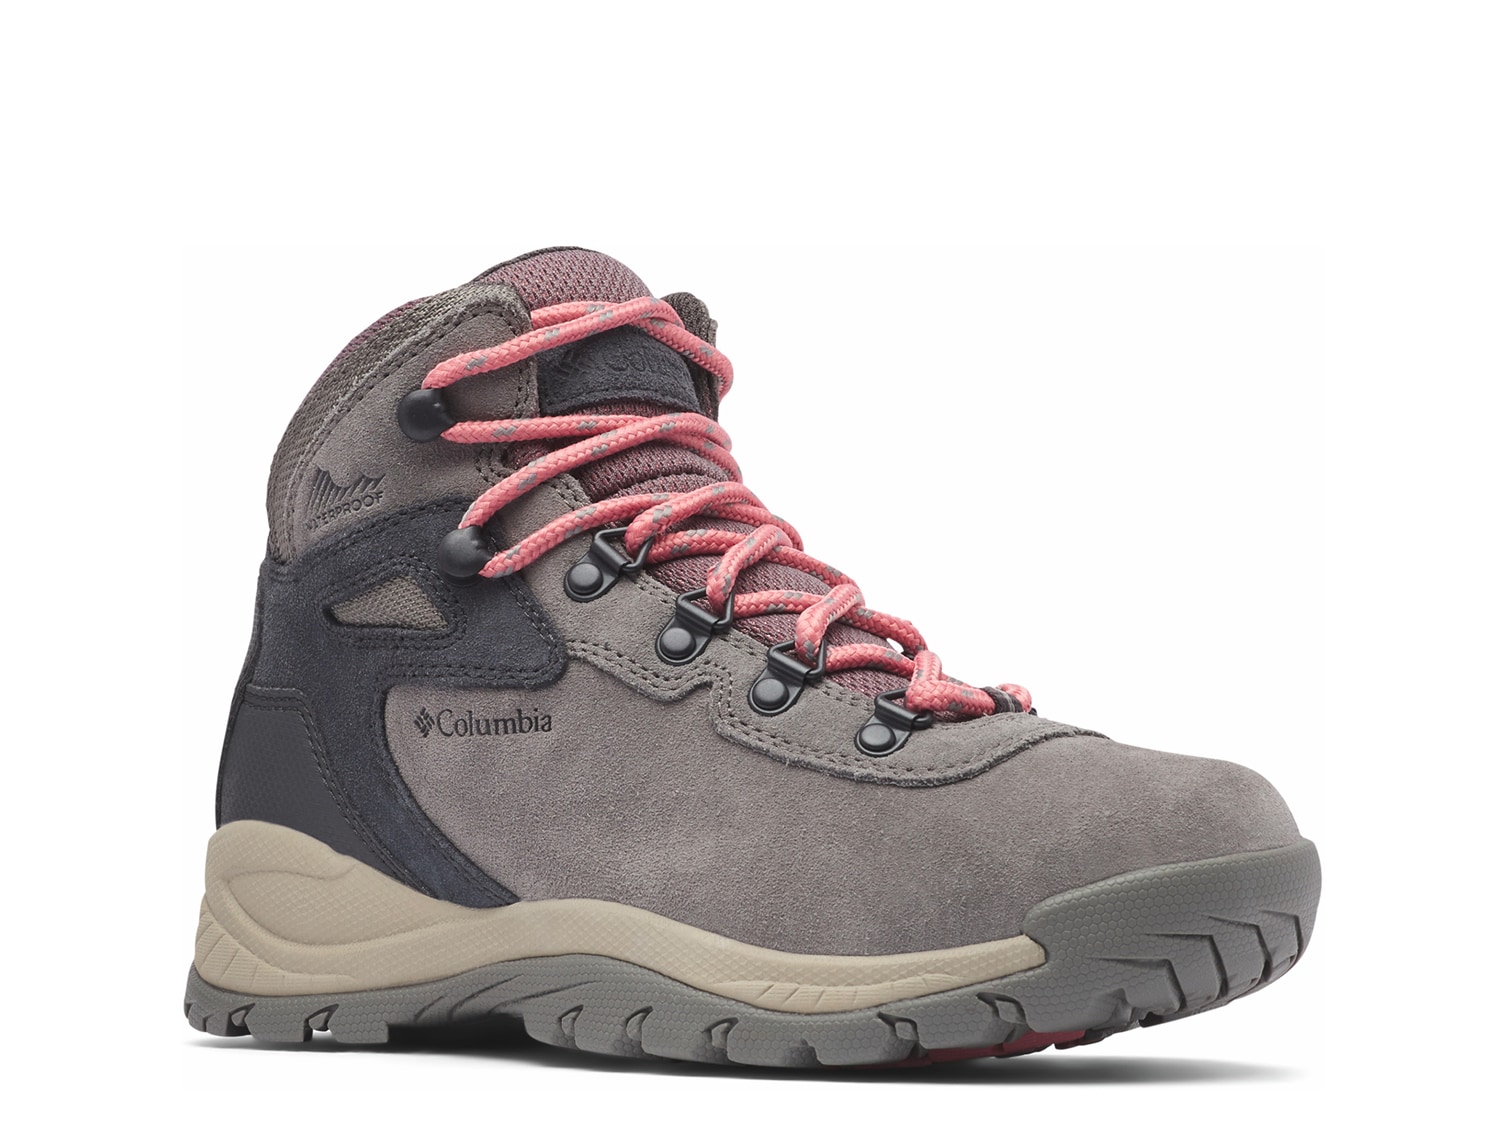 Columbia Newton Ridge Plus Hiking Boot - Women's - Free Shipping